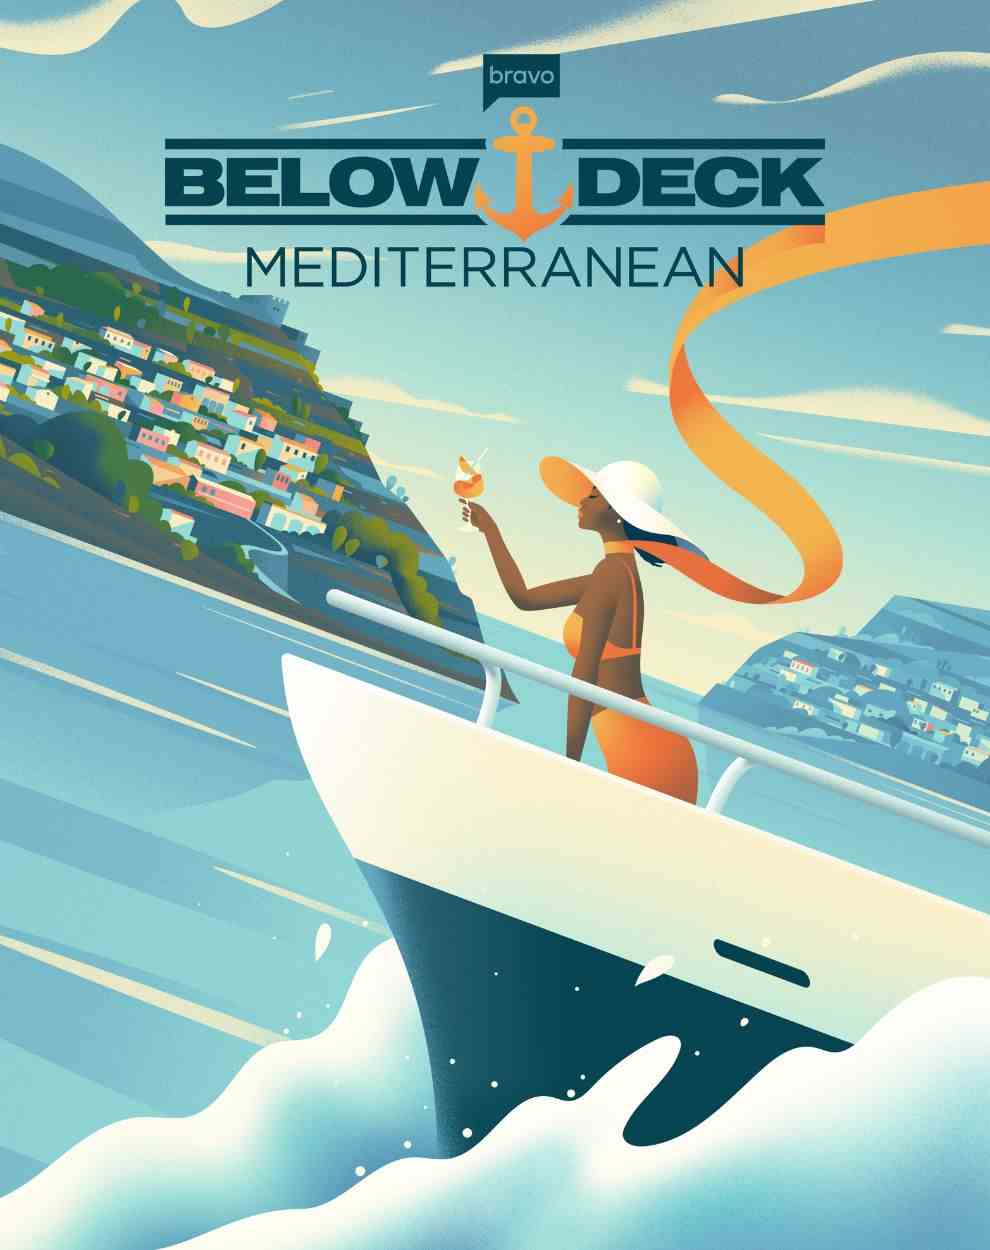 Below Deck with Jack Daly